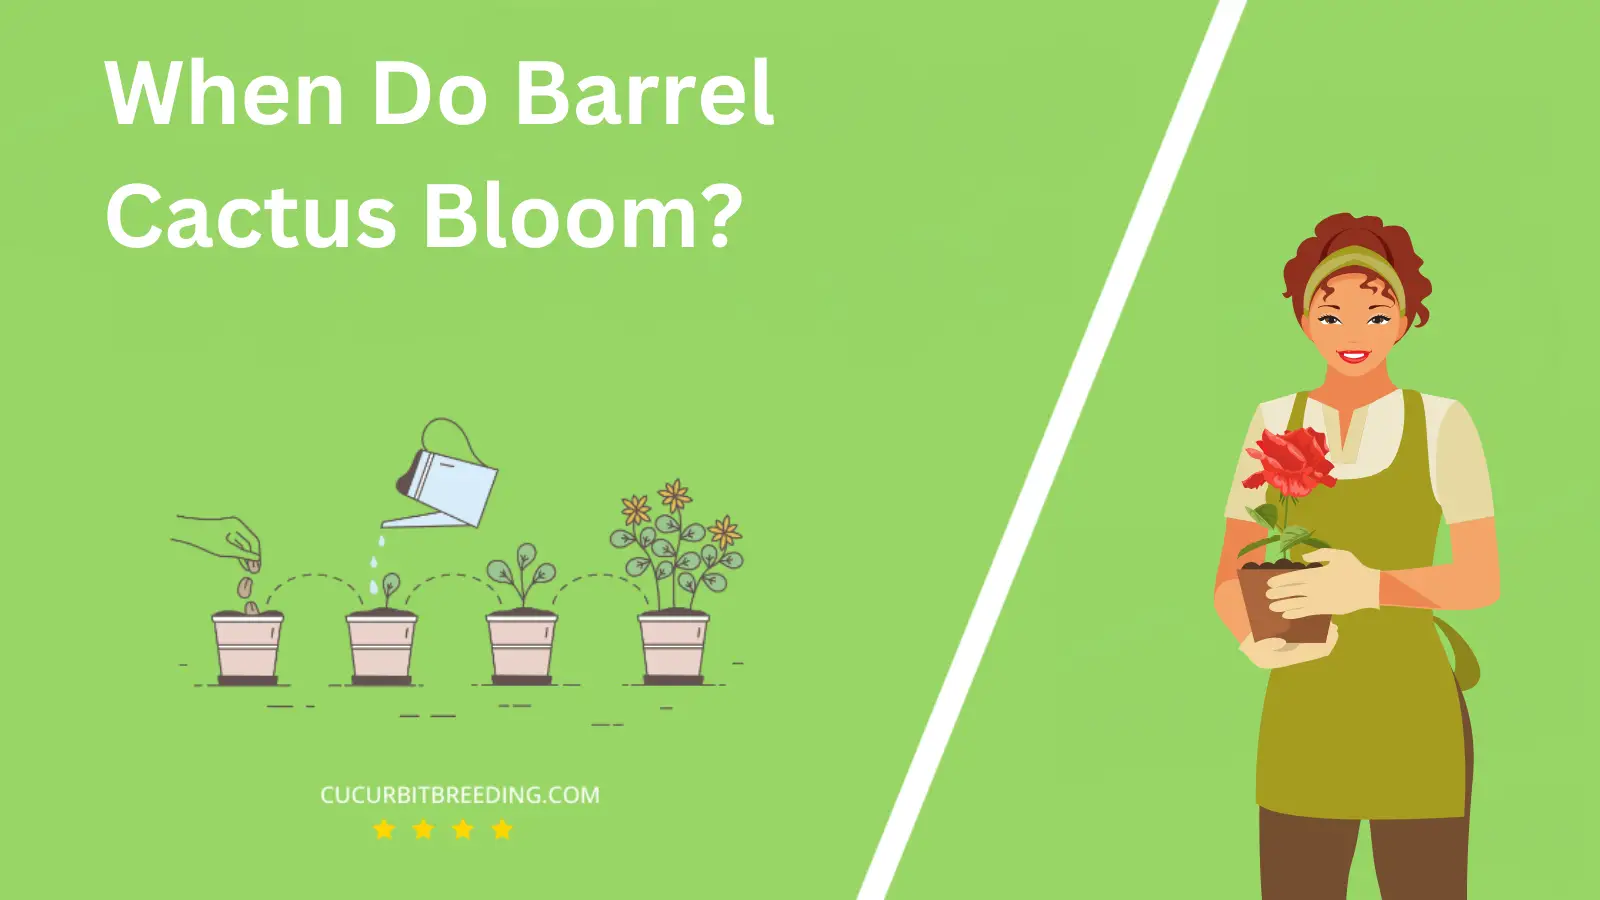 When Do Barrel Cactus Bloom?